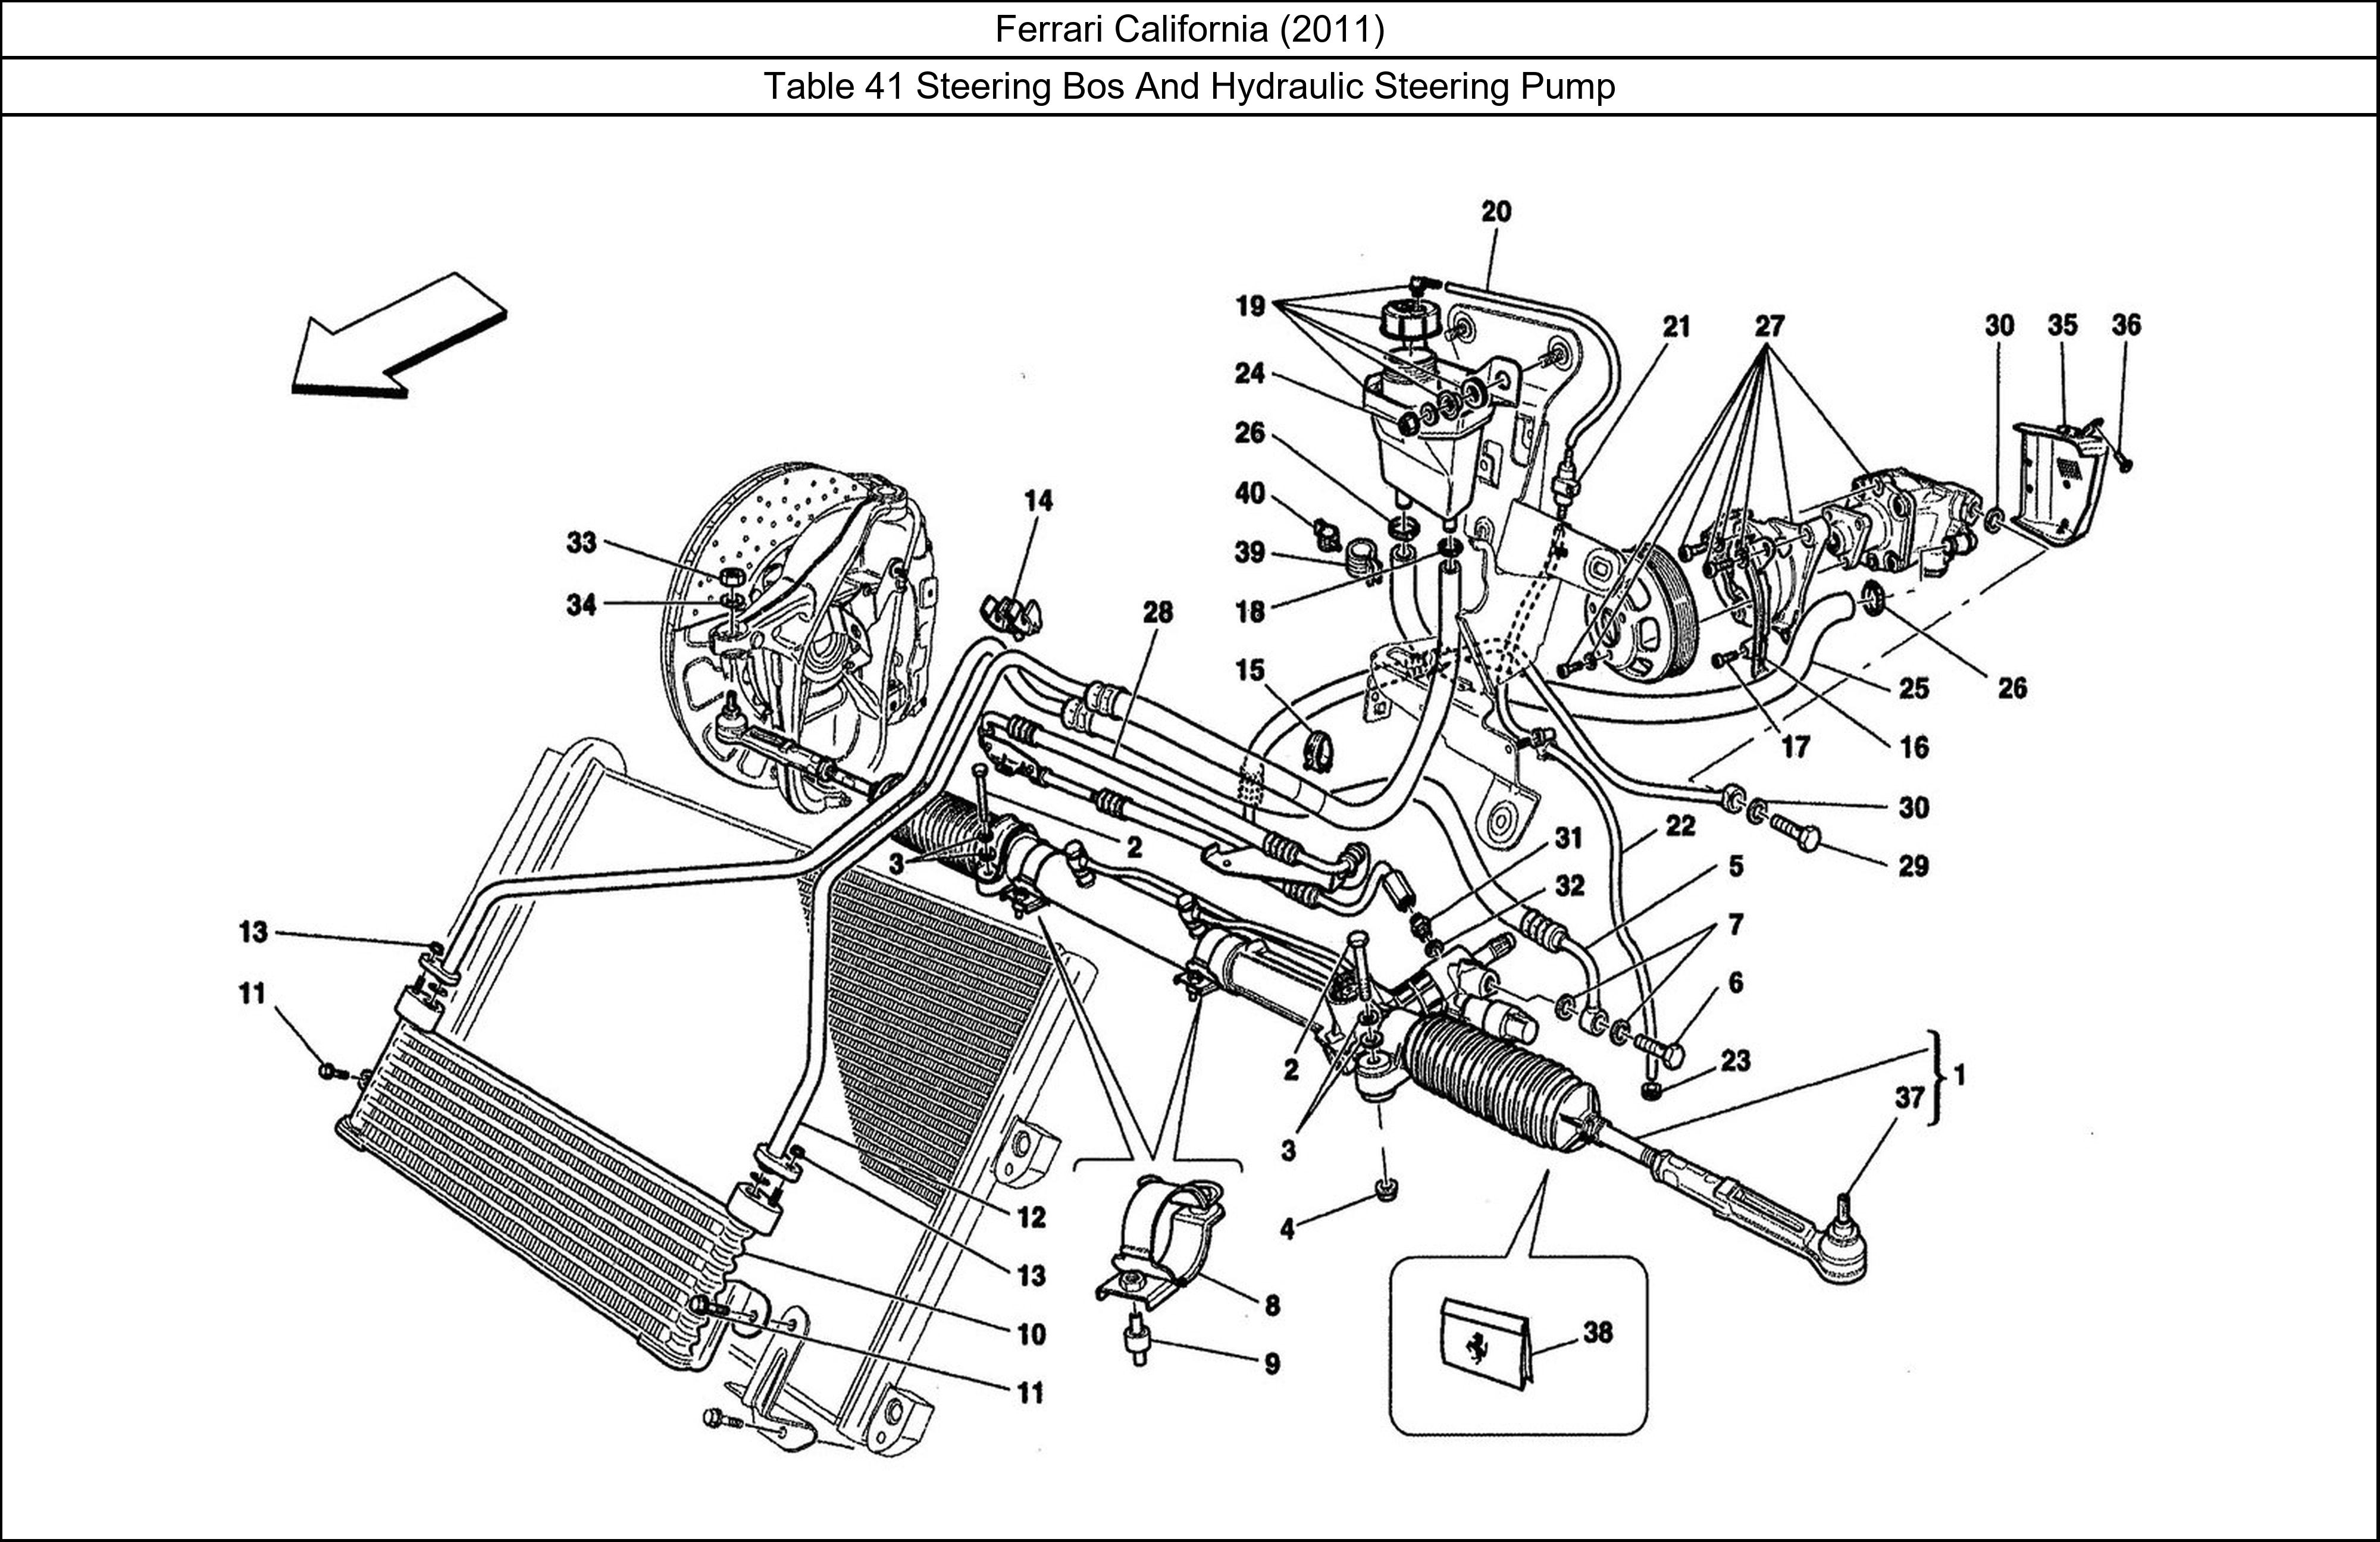 Ferrari Parts Ferrari California (2011) Table 41 Steering Bos And Hydraulic Steering Pump